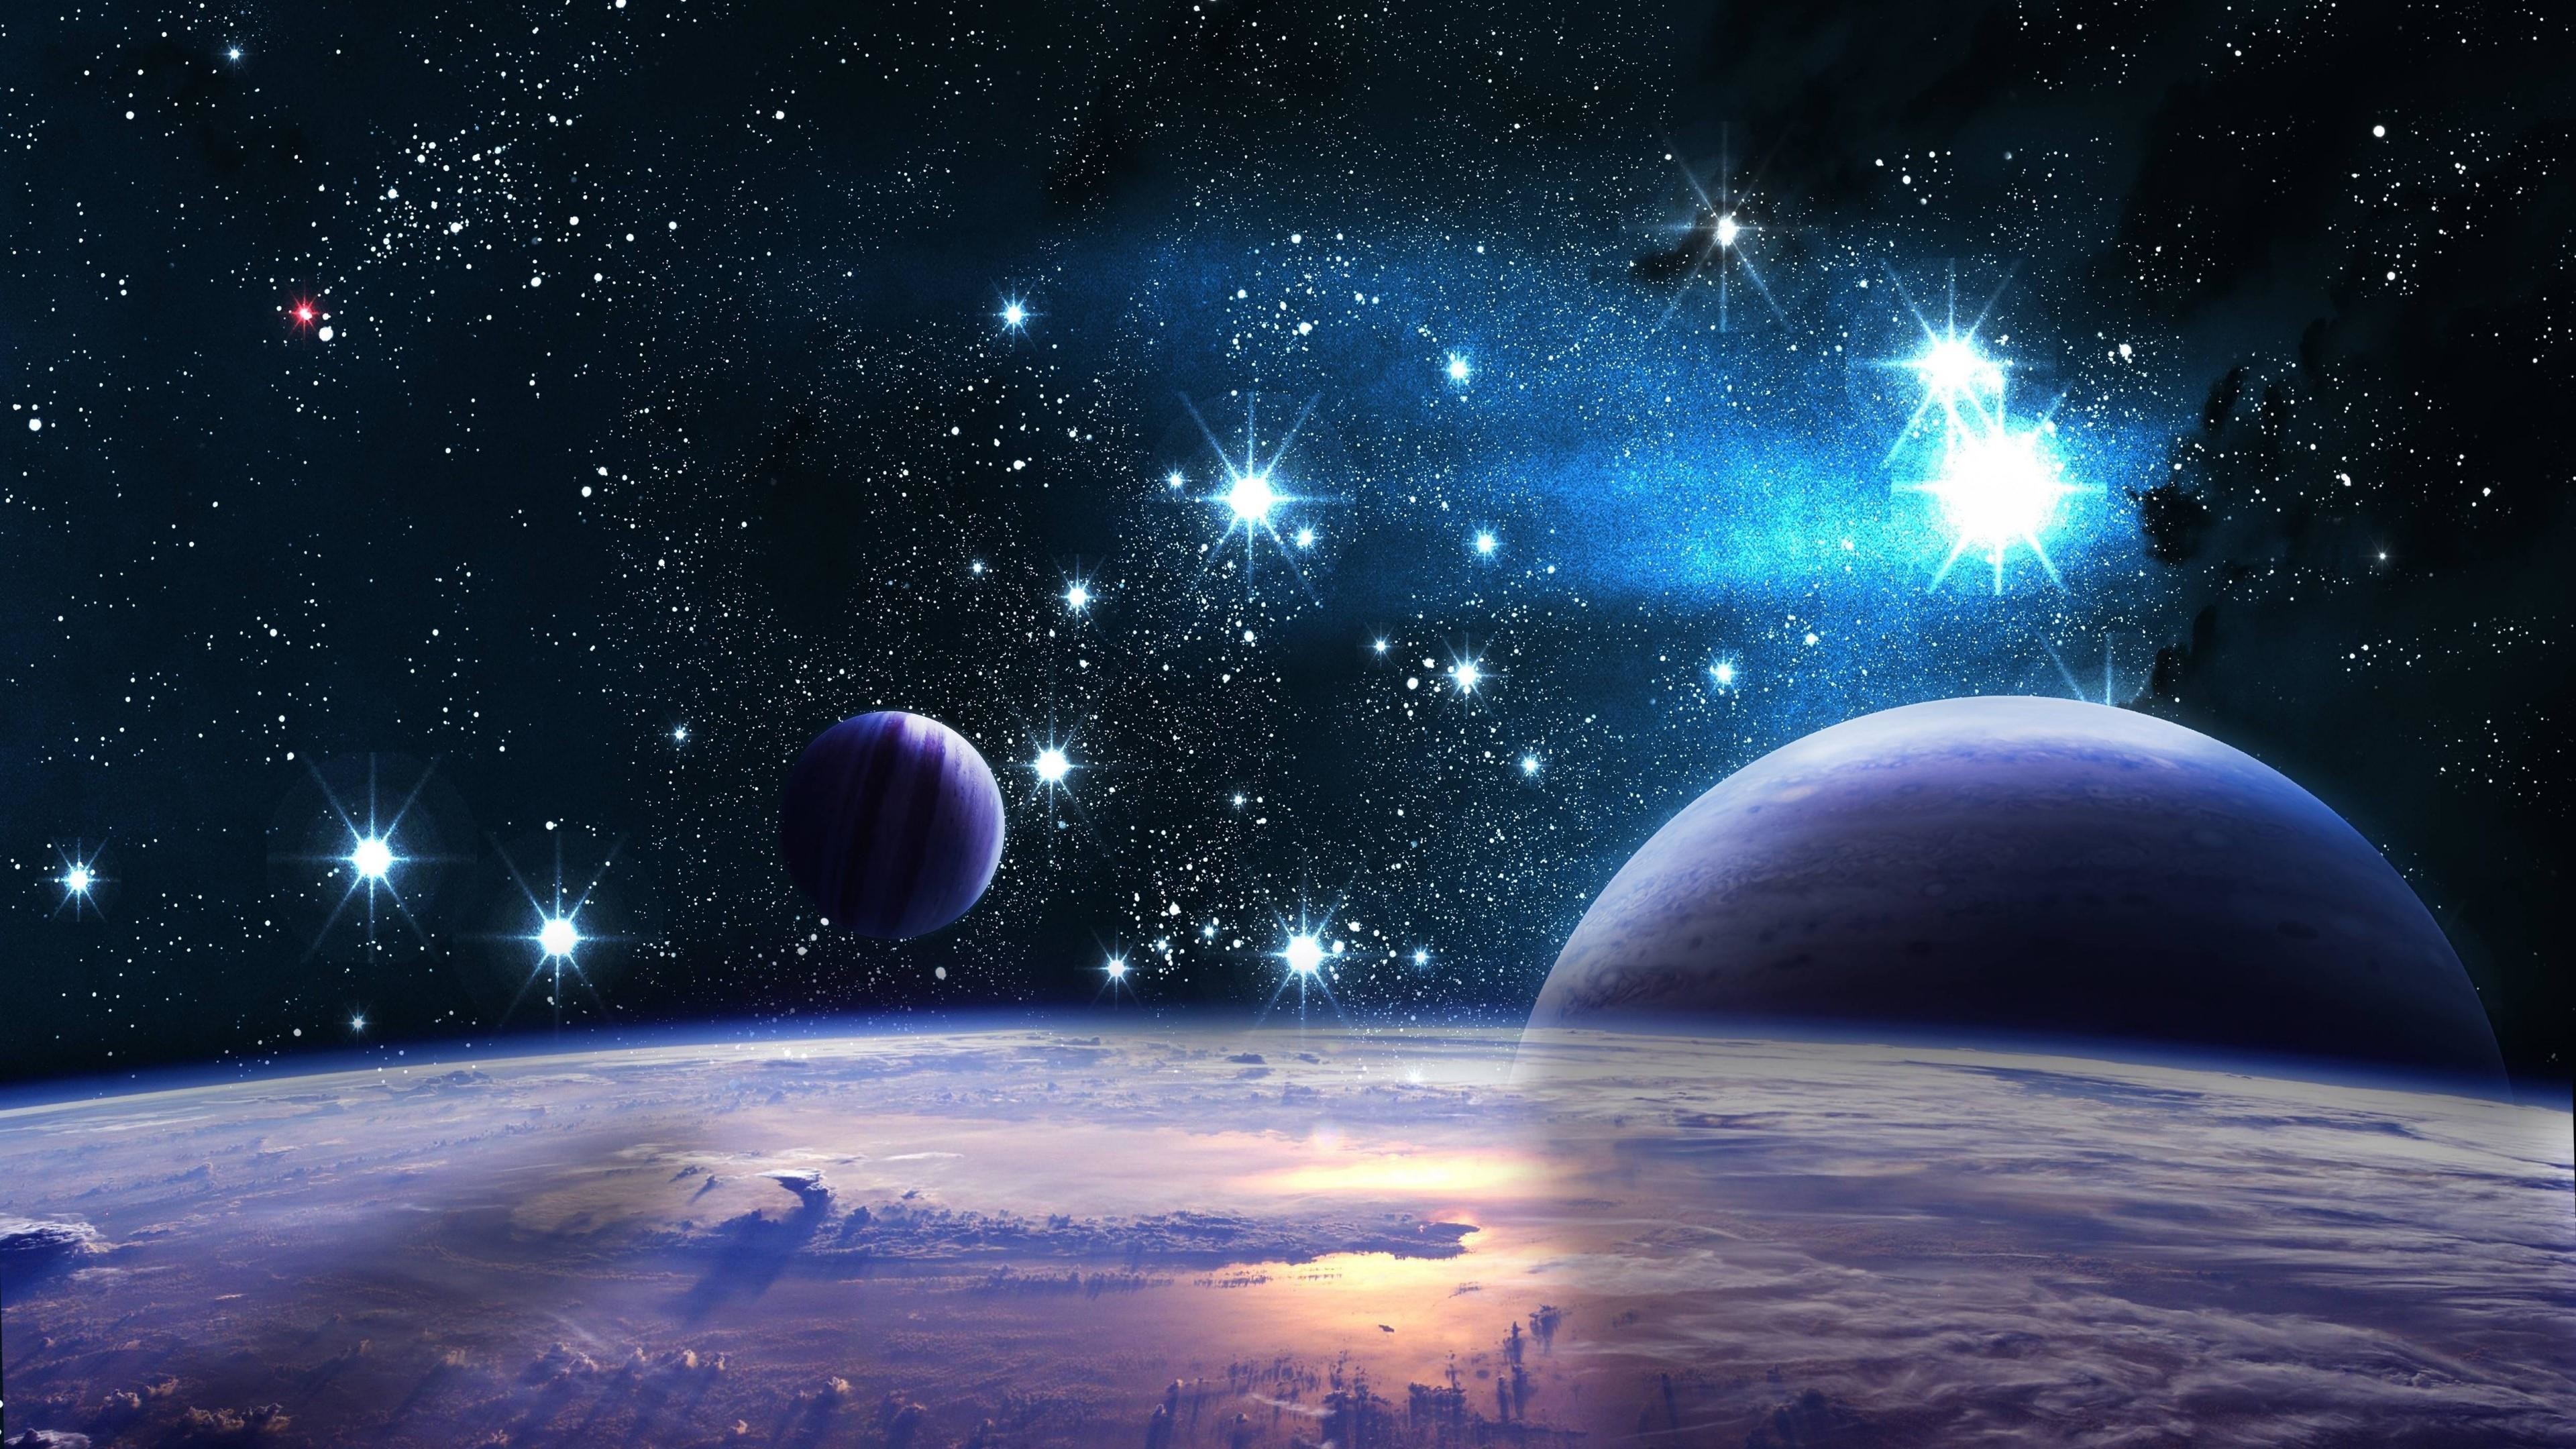 universo fondo de pantalla,espacio exterior,atmósfera,planeta,universo,objeto astronómico